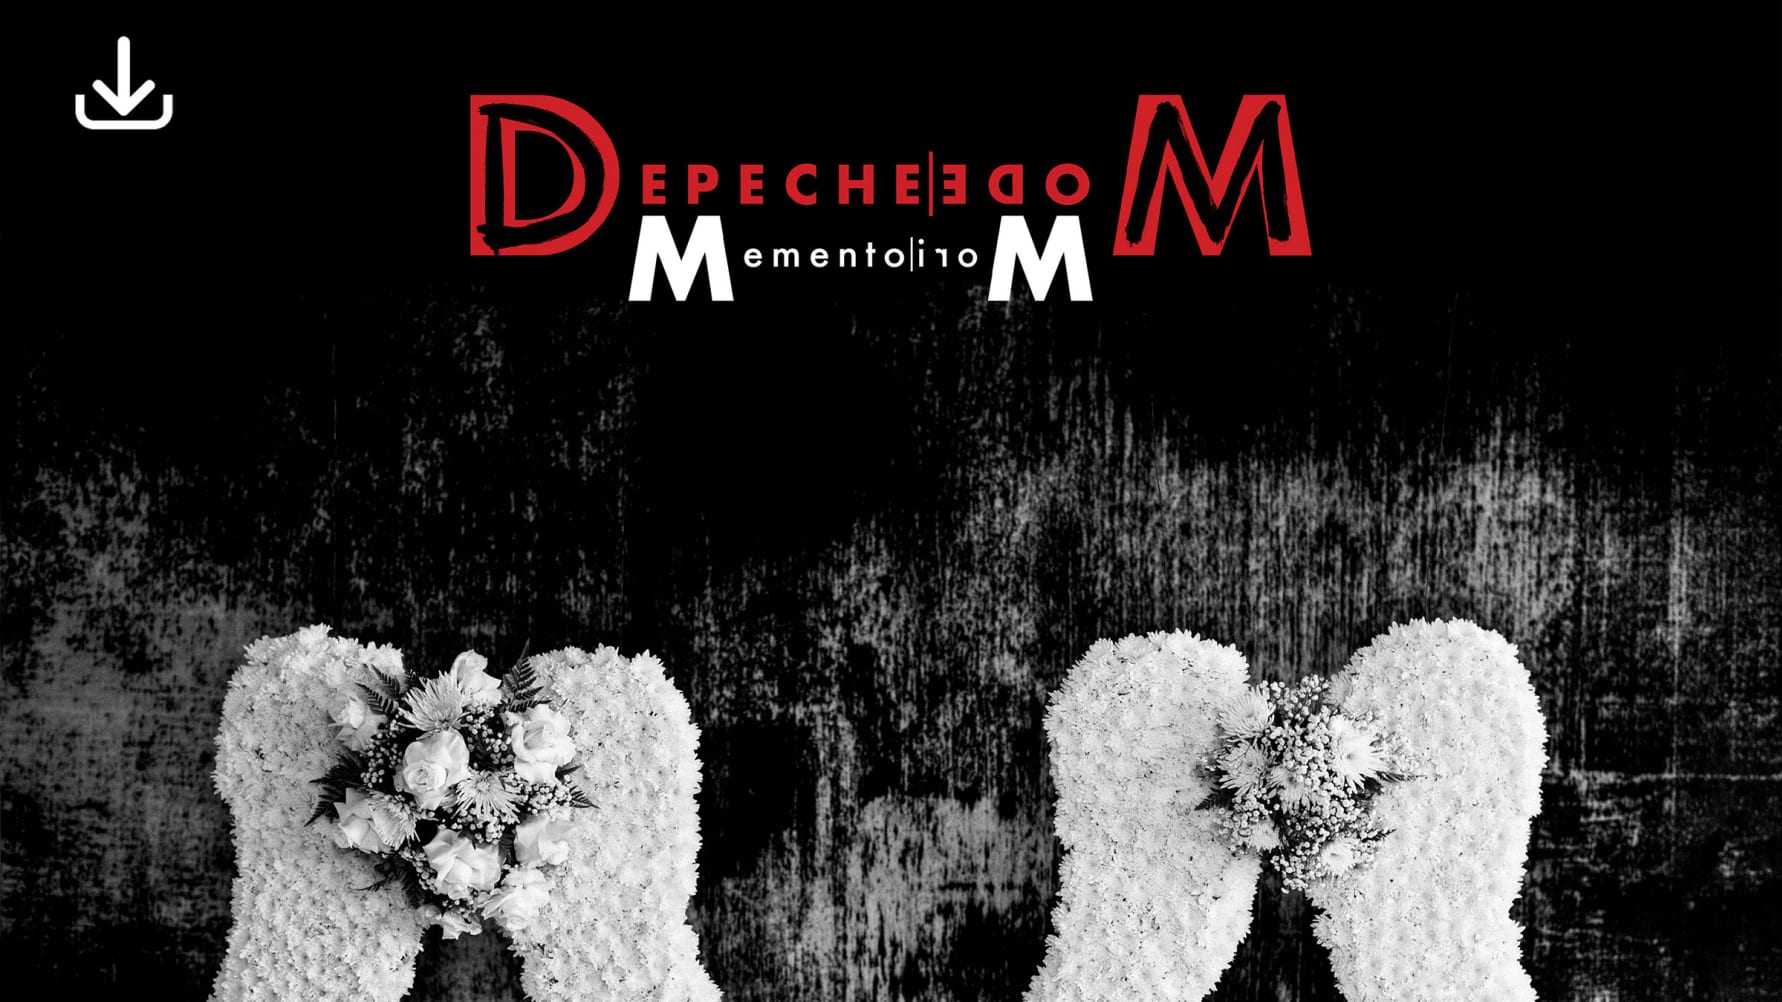 Depeche Mode – trippeletta i Sverige med hyllade nya albumet ”Memento Mori”